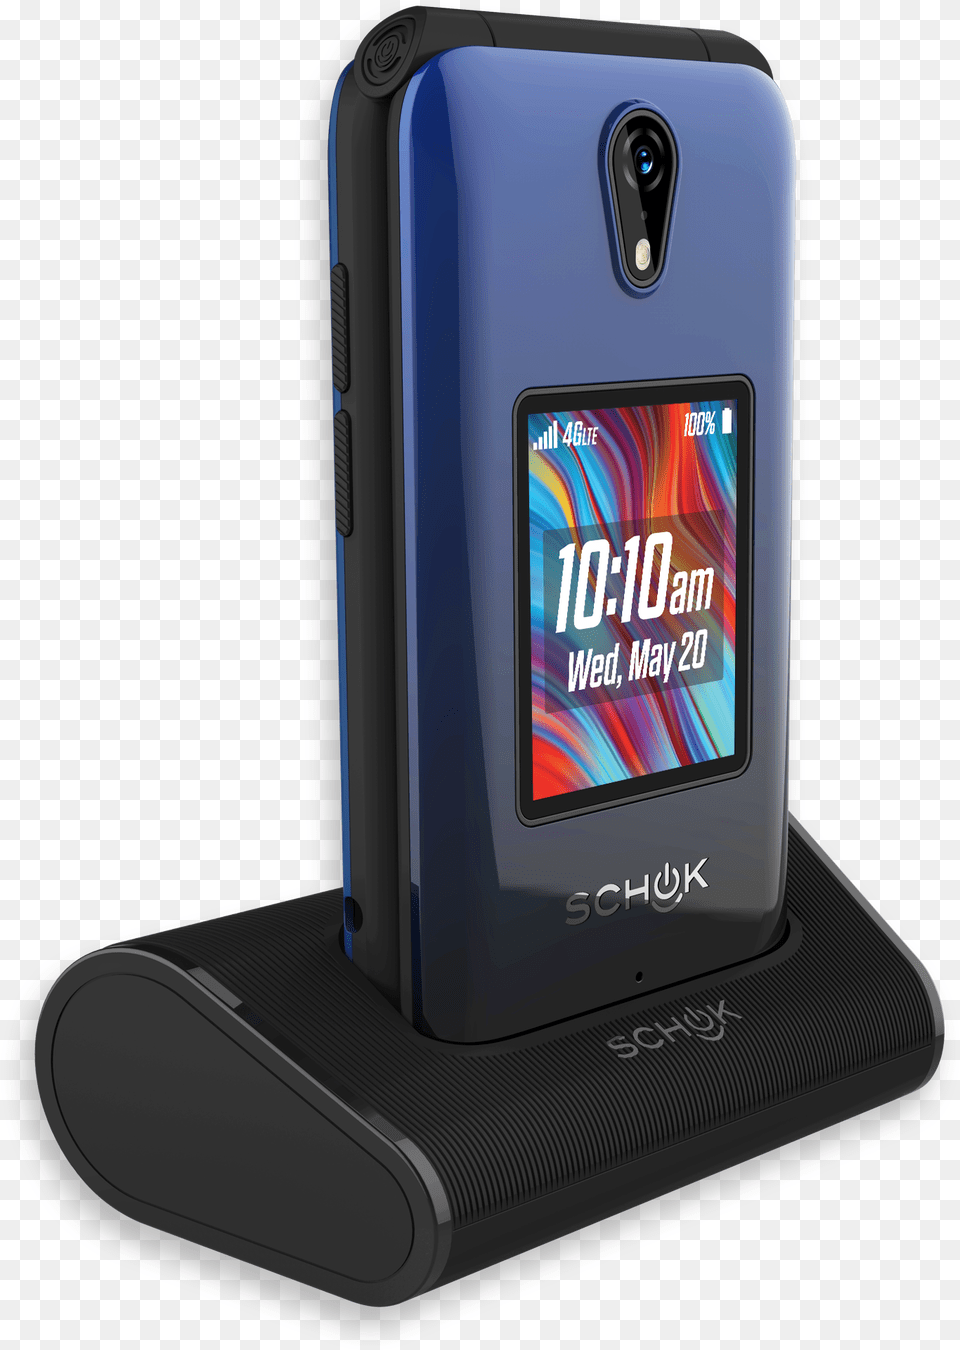 Schok Classic Flip Gsm Unlocked Phone Portable, Electronics, Mobile Phone Png Image